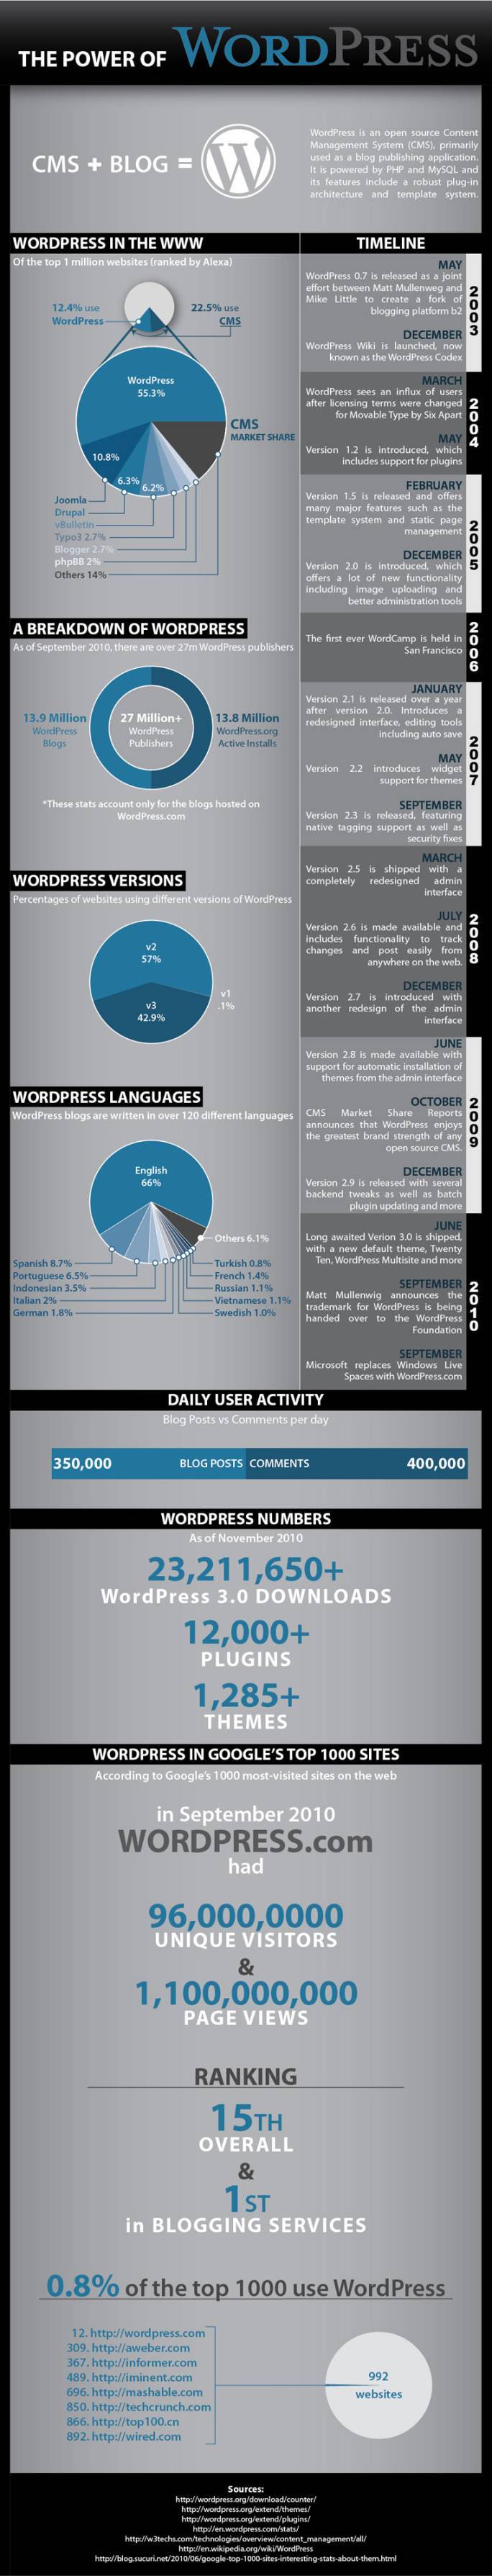 Infographic: The Power of WordPress